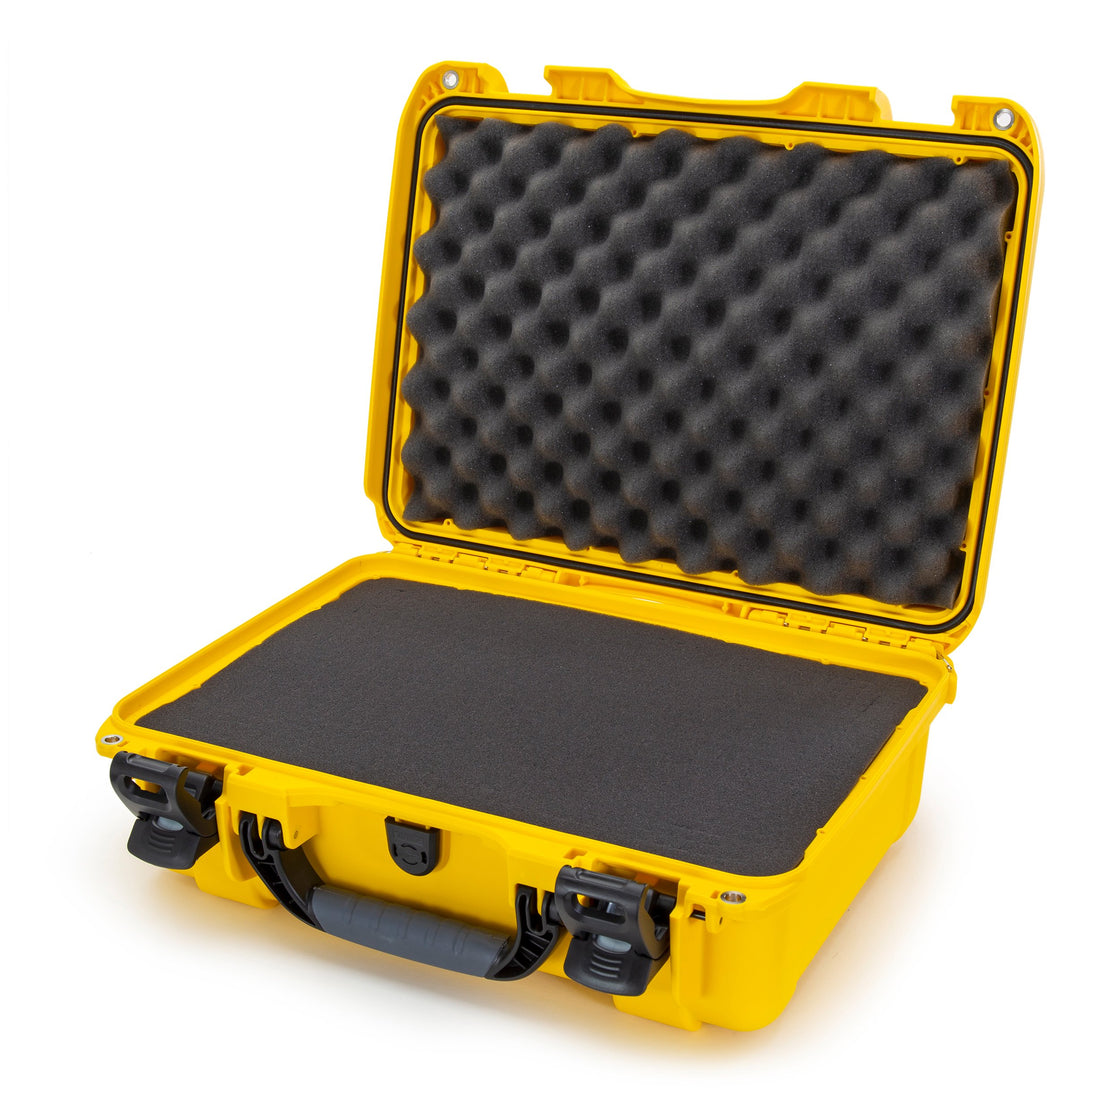 Nanuk 925 Waterproof Hard Case with Foam Insert - Yellow